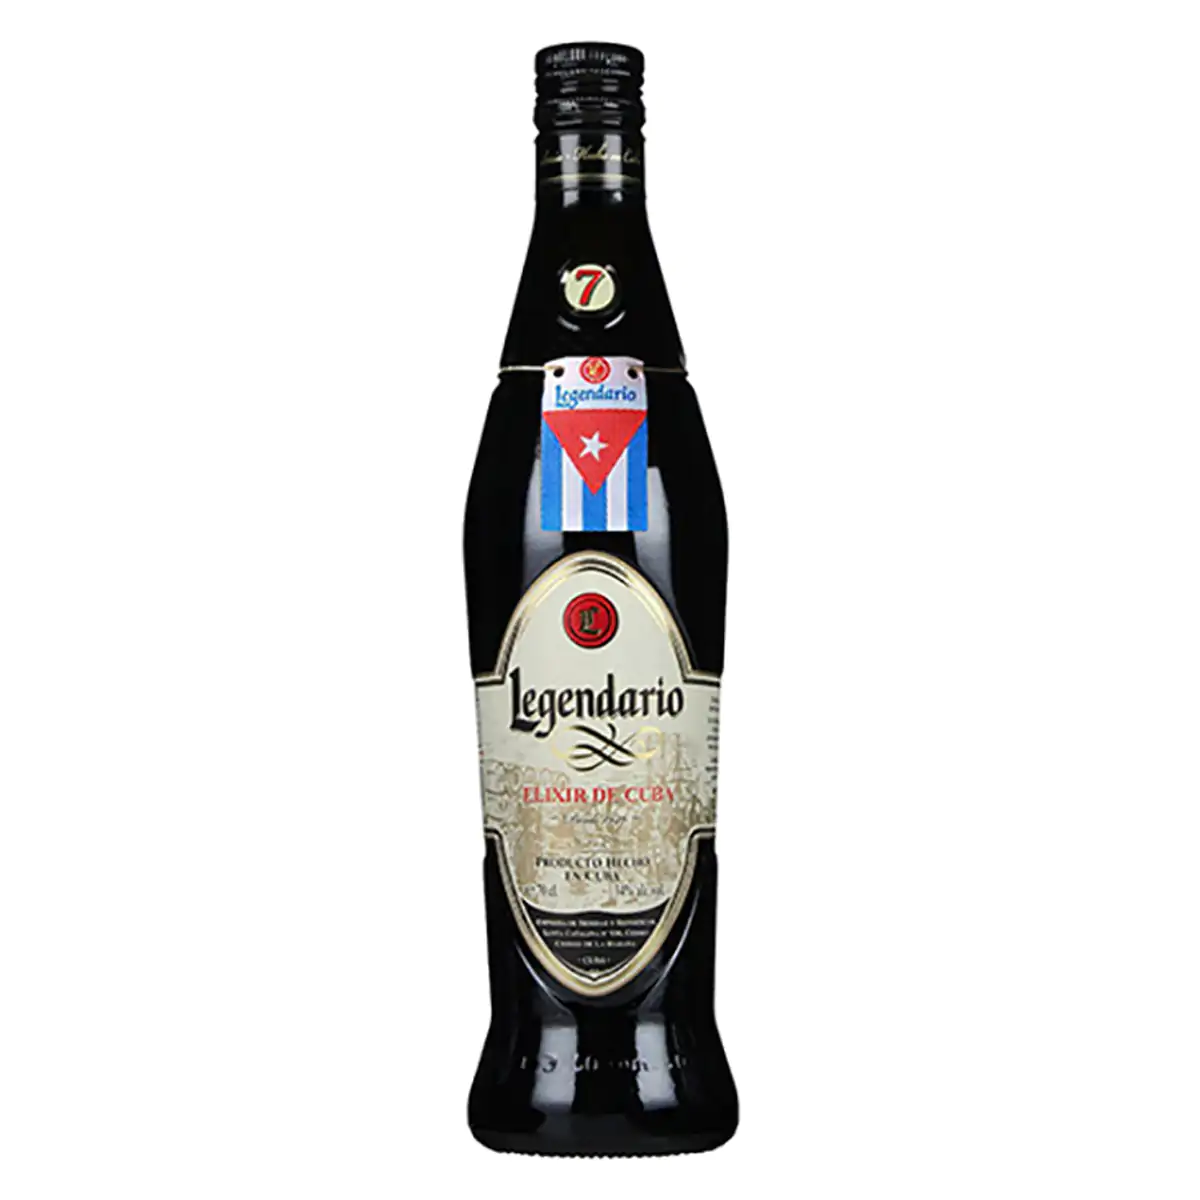 Legendario Elixir de Cuba Rum Likör 34% Vol. 700ml jetzt kaufen | Likör